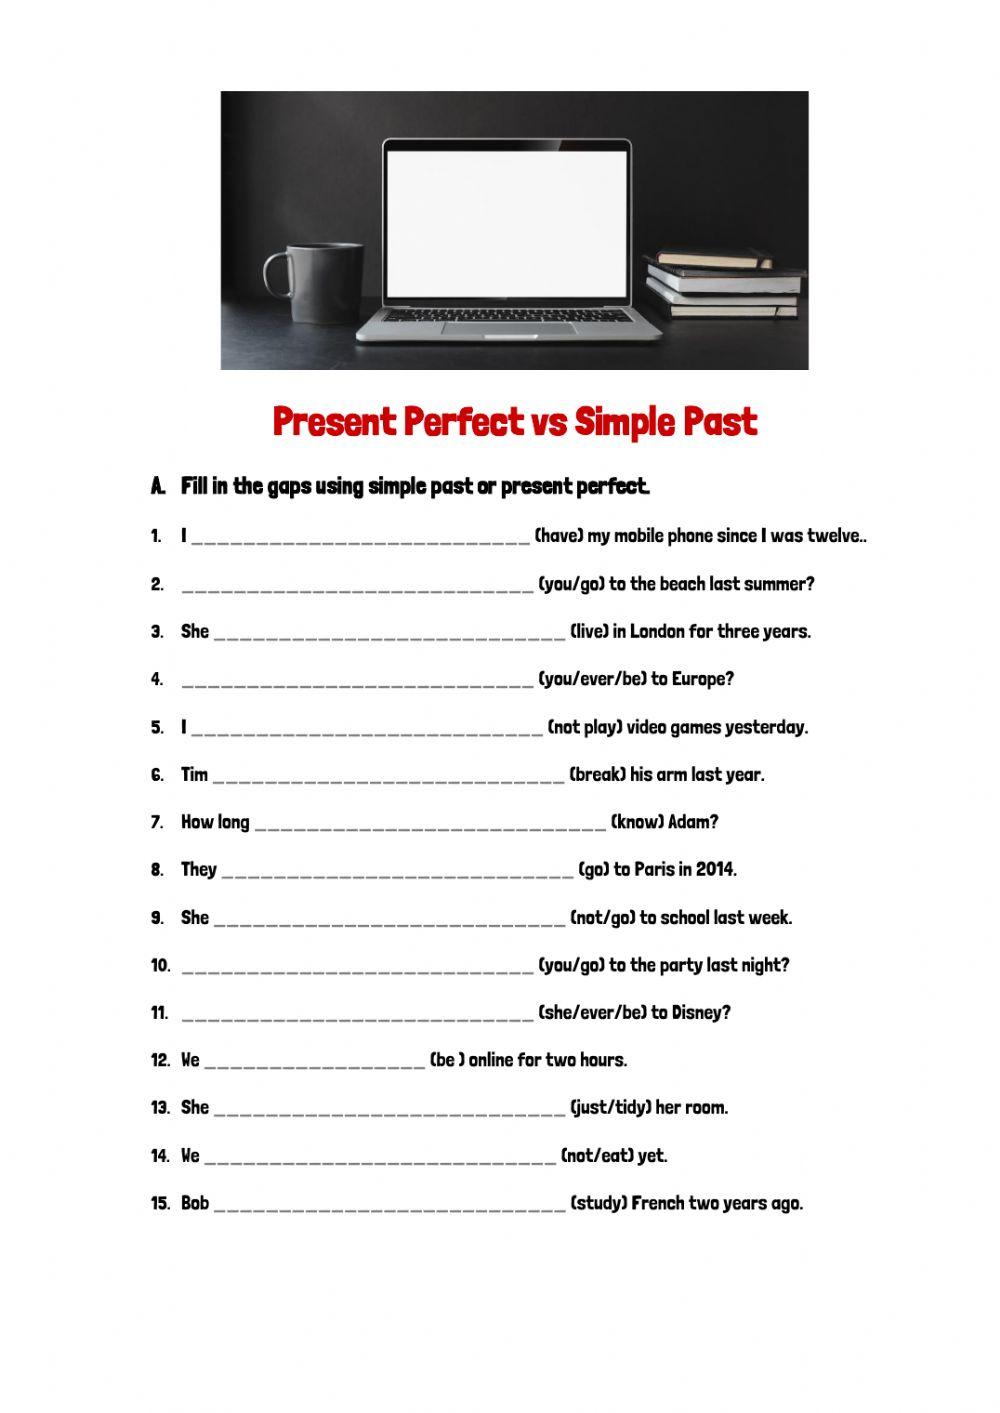 Present Perfect vs Simple Past